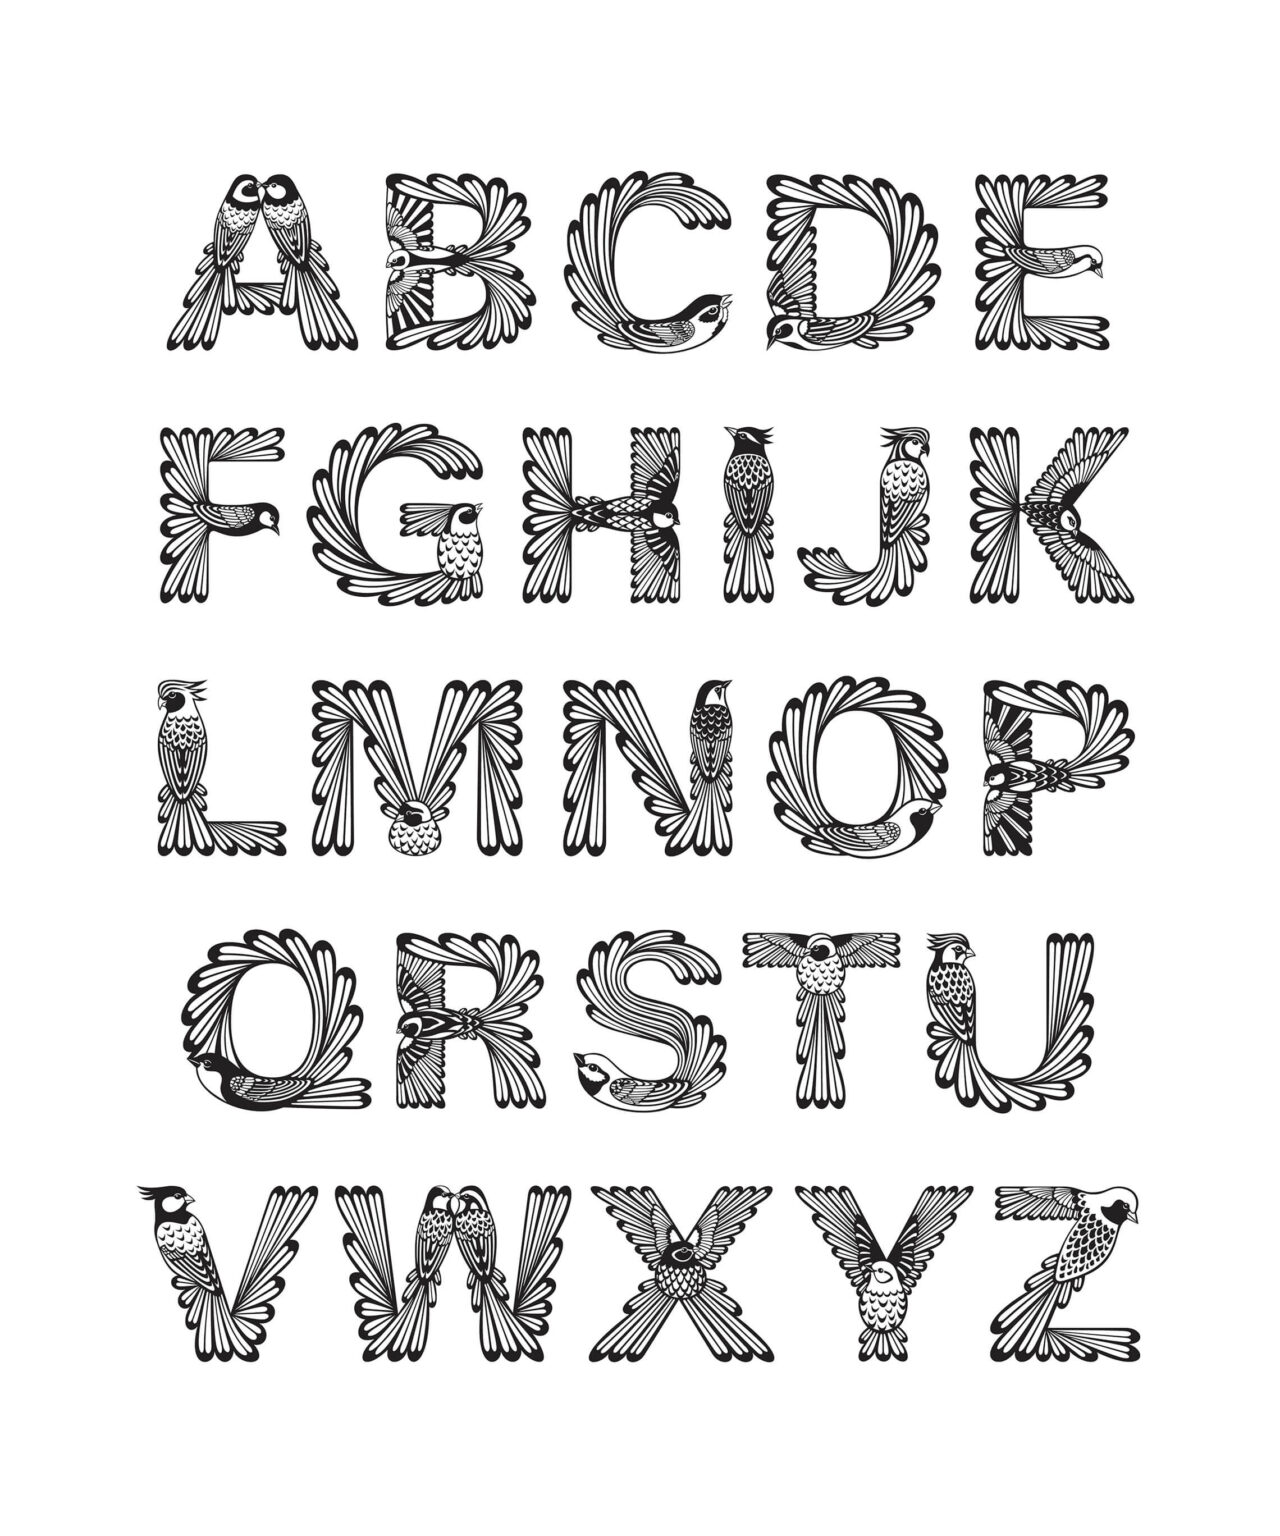 A–Z i alfabetet "Ornis"